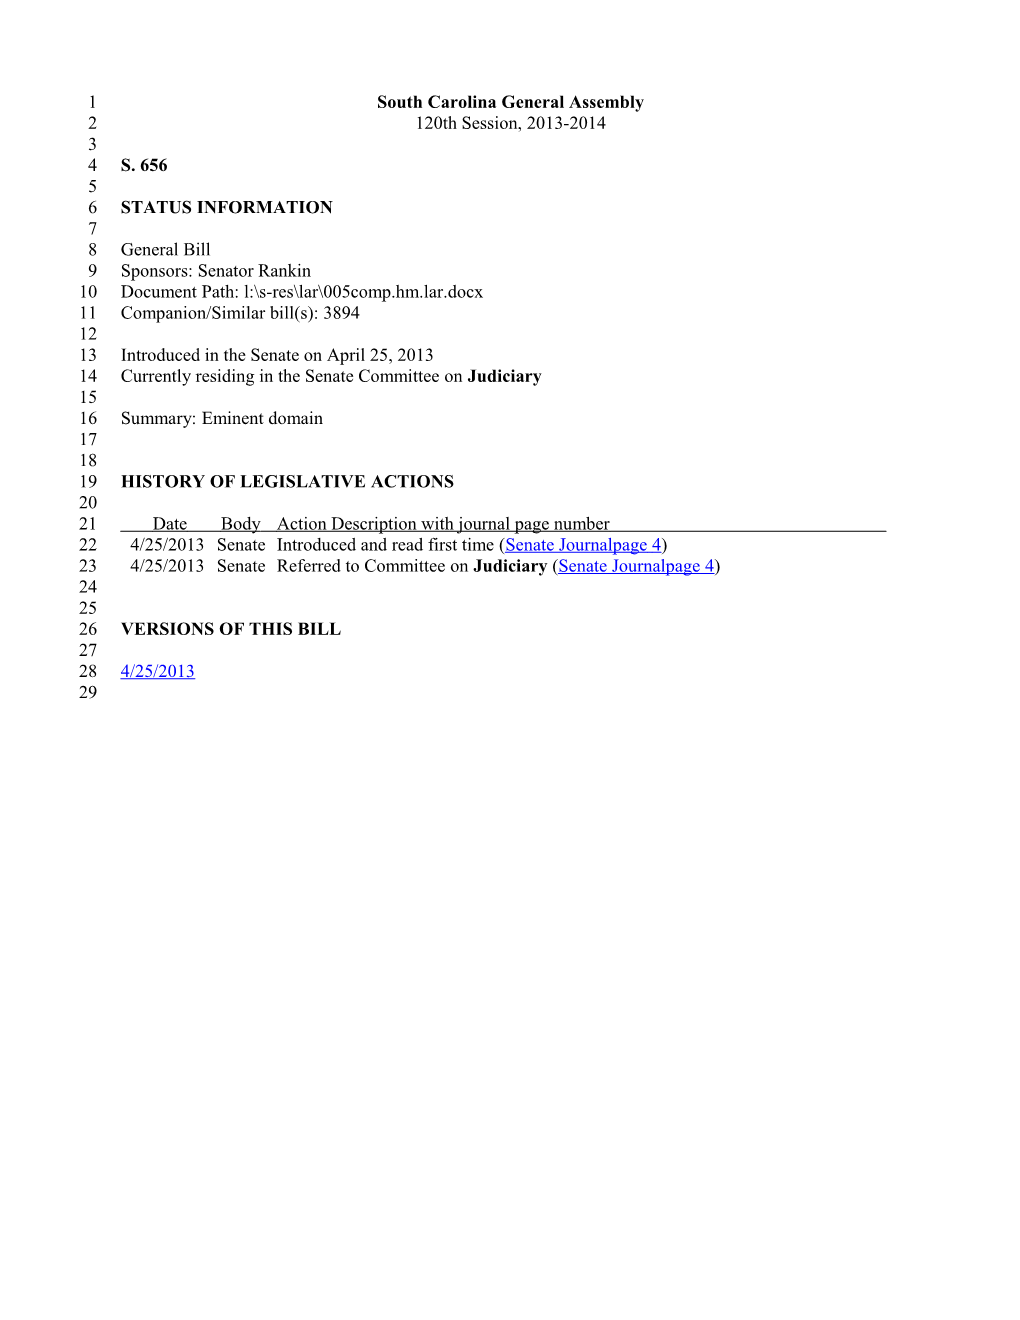 2013-2014 Bill 656: Eminent Domain - South Carolina Legislature Online